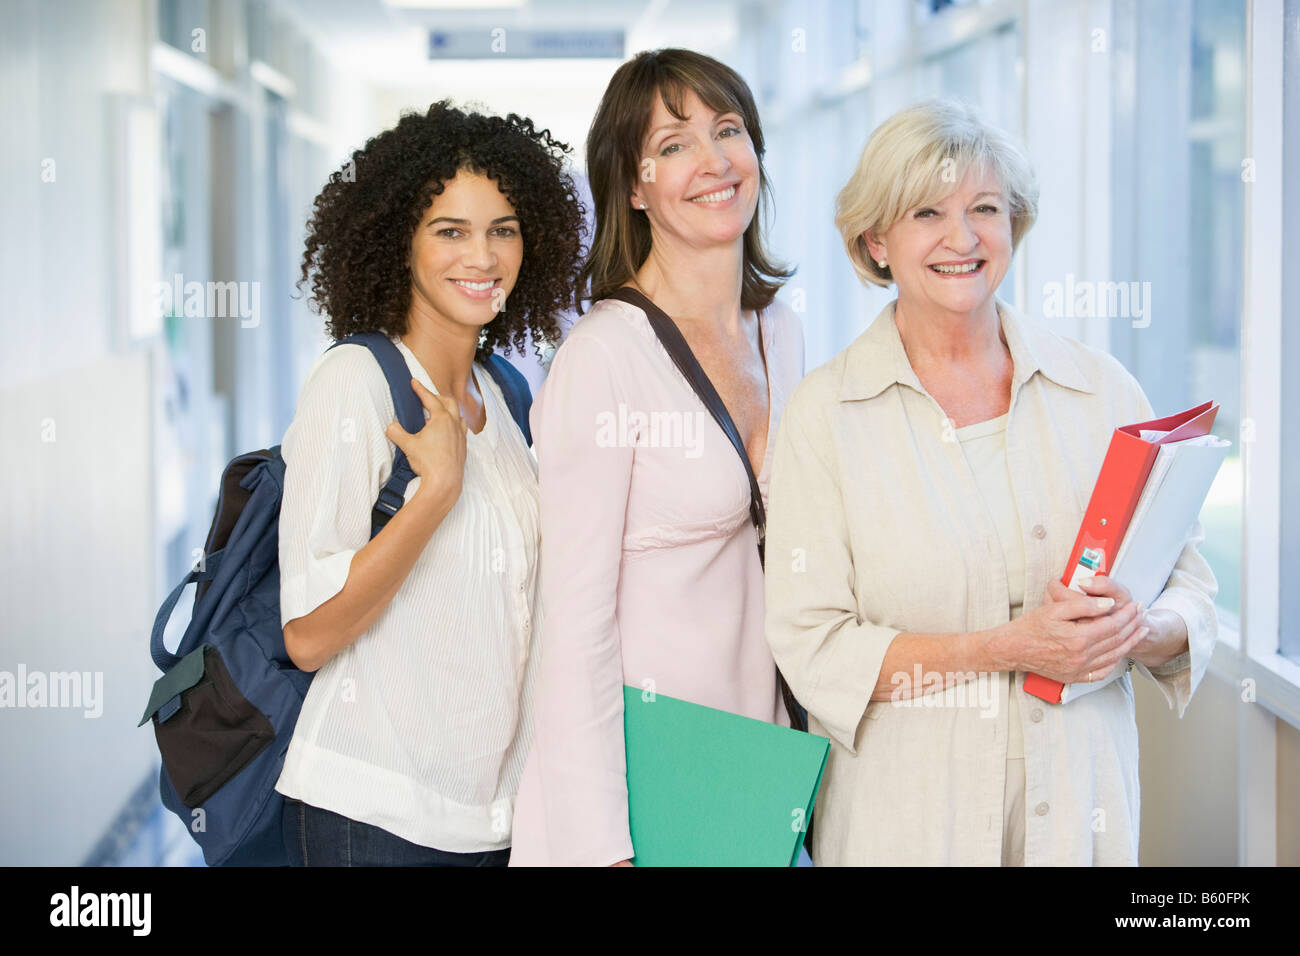 Three women standing in corridor with books (high key) Stock Photo